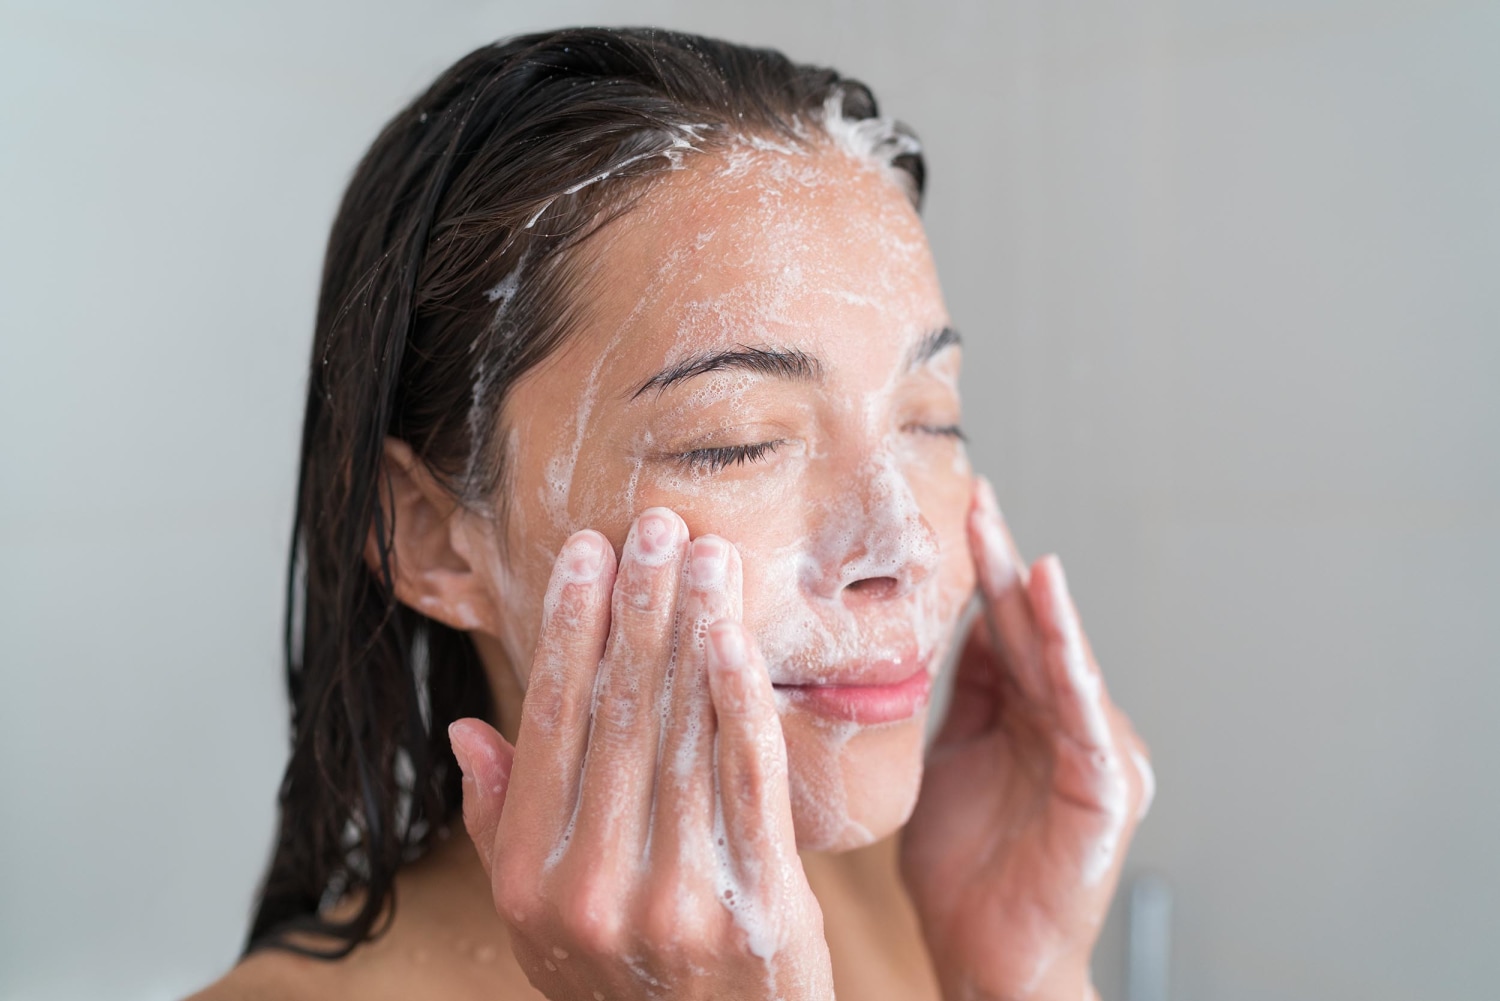 Dermatologist Reacts To Dandruff Shampoo As Face Wash Viral Hack